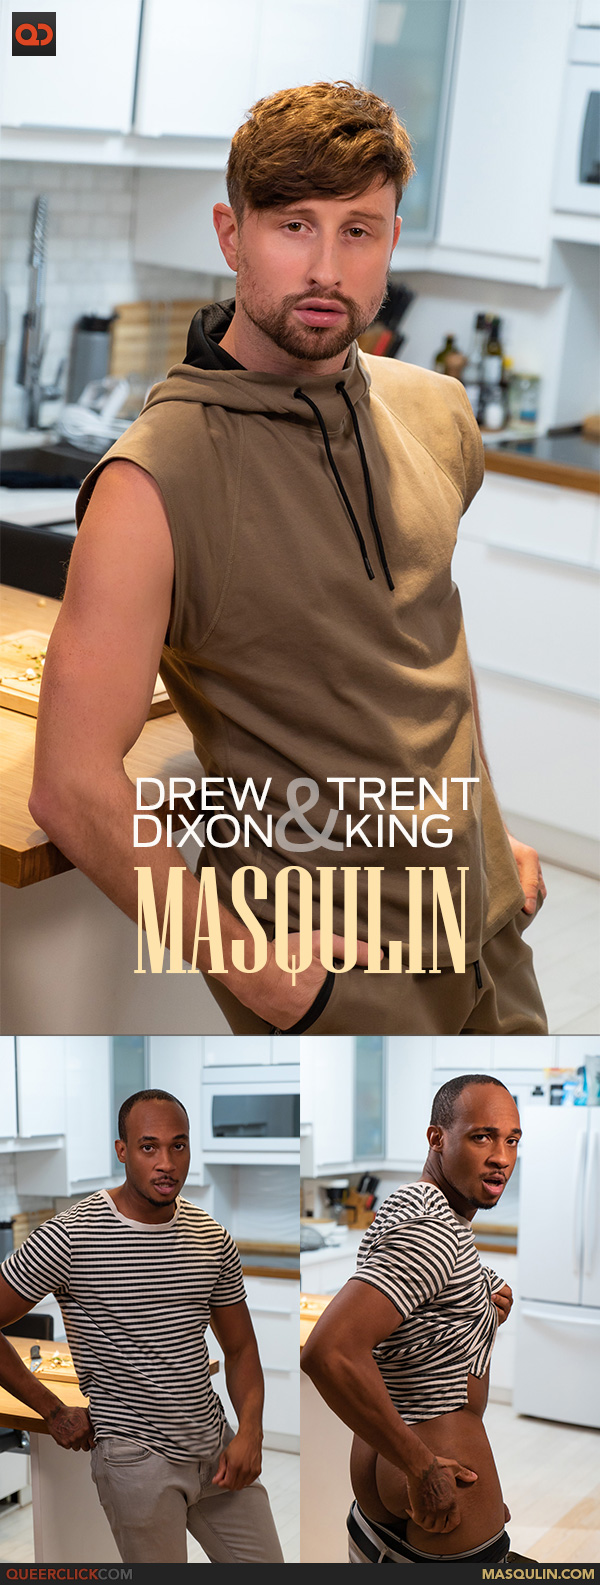 The Bro Network | Masqulin: Drew Dixon and Trent King